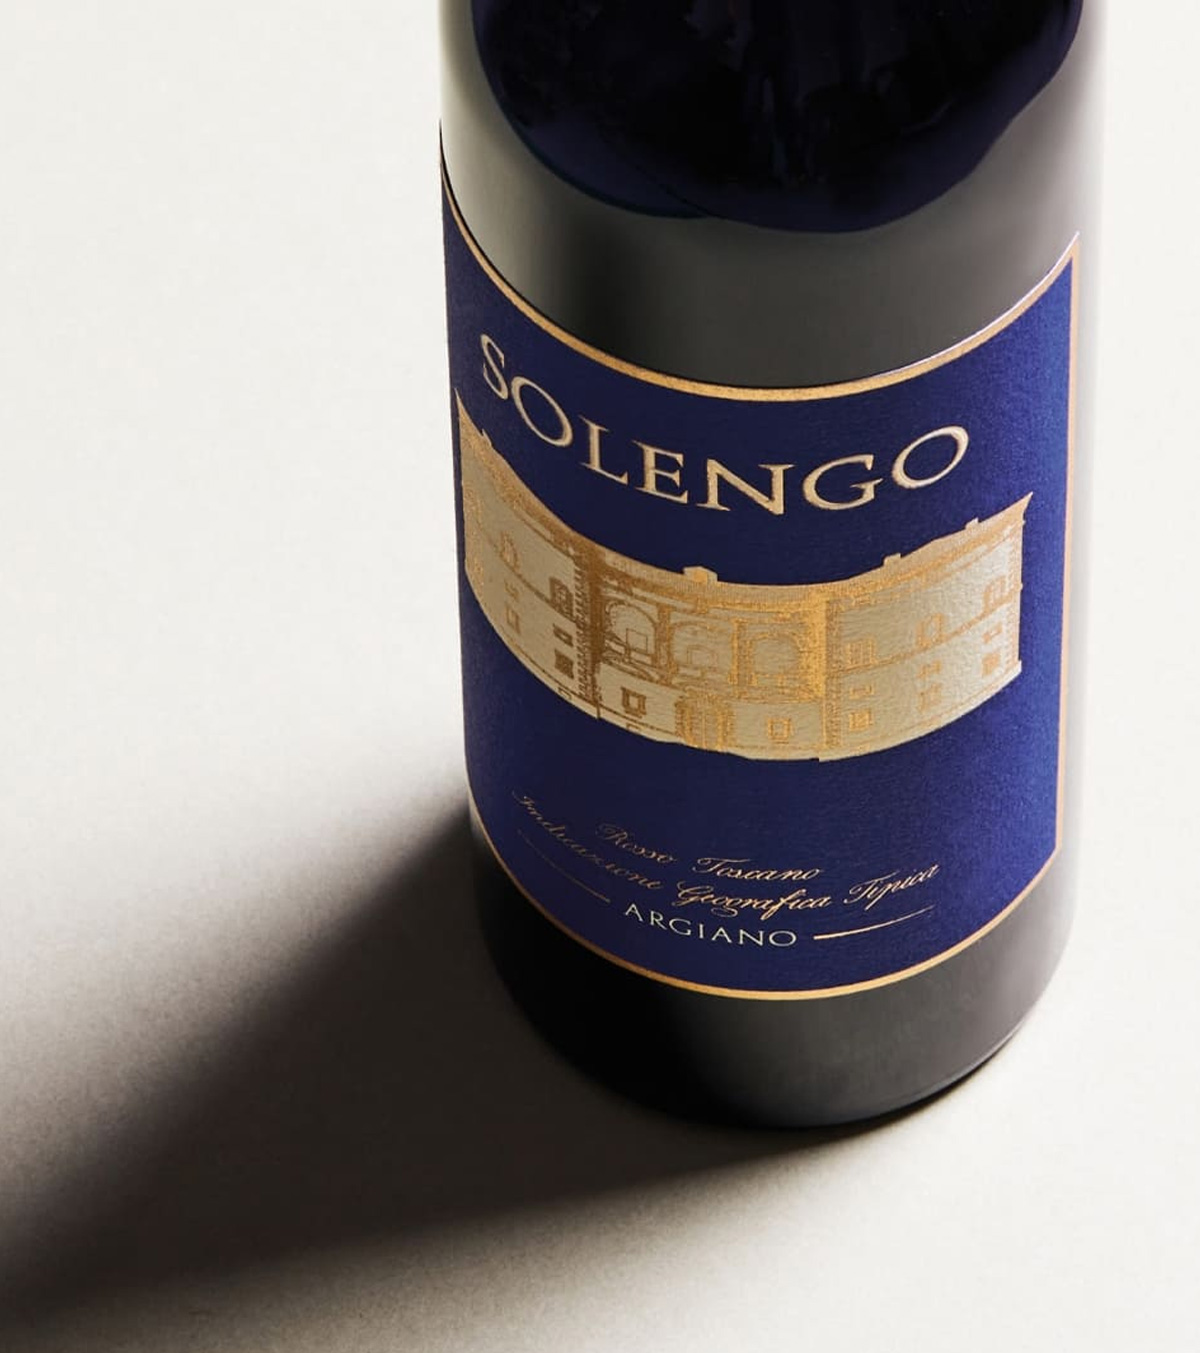 Solengo Argiano Imported by Maze Row